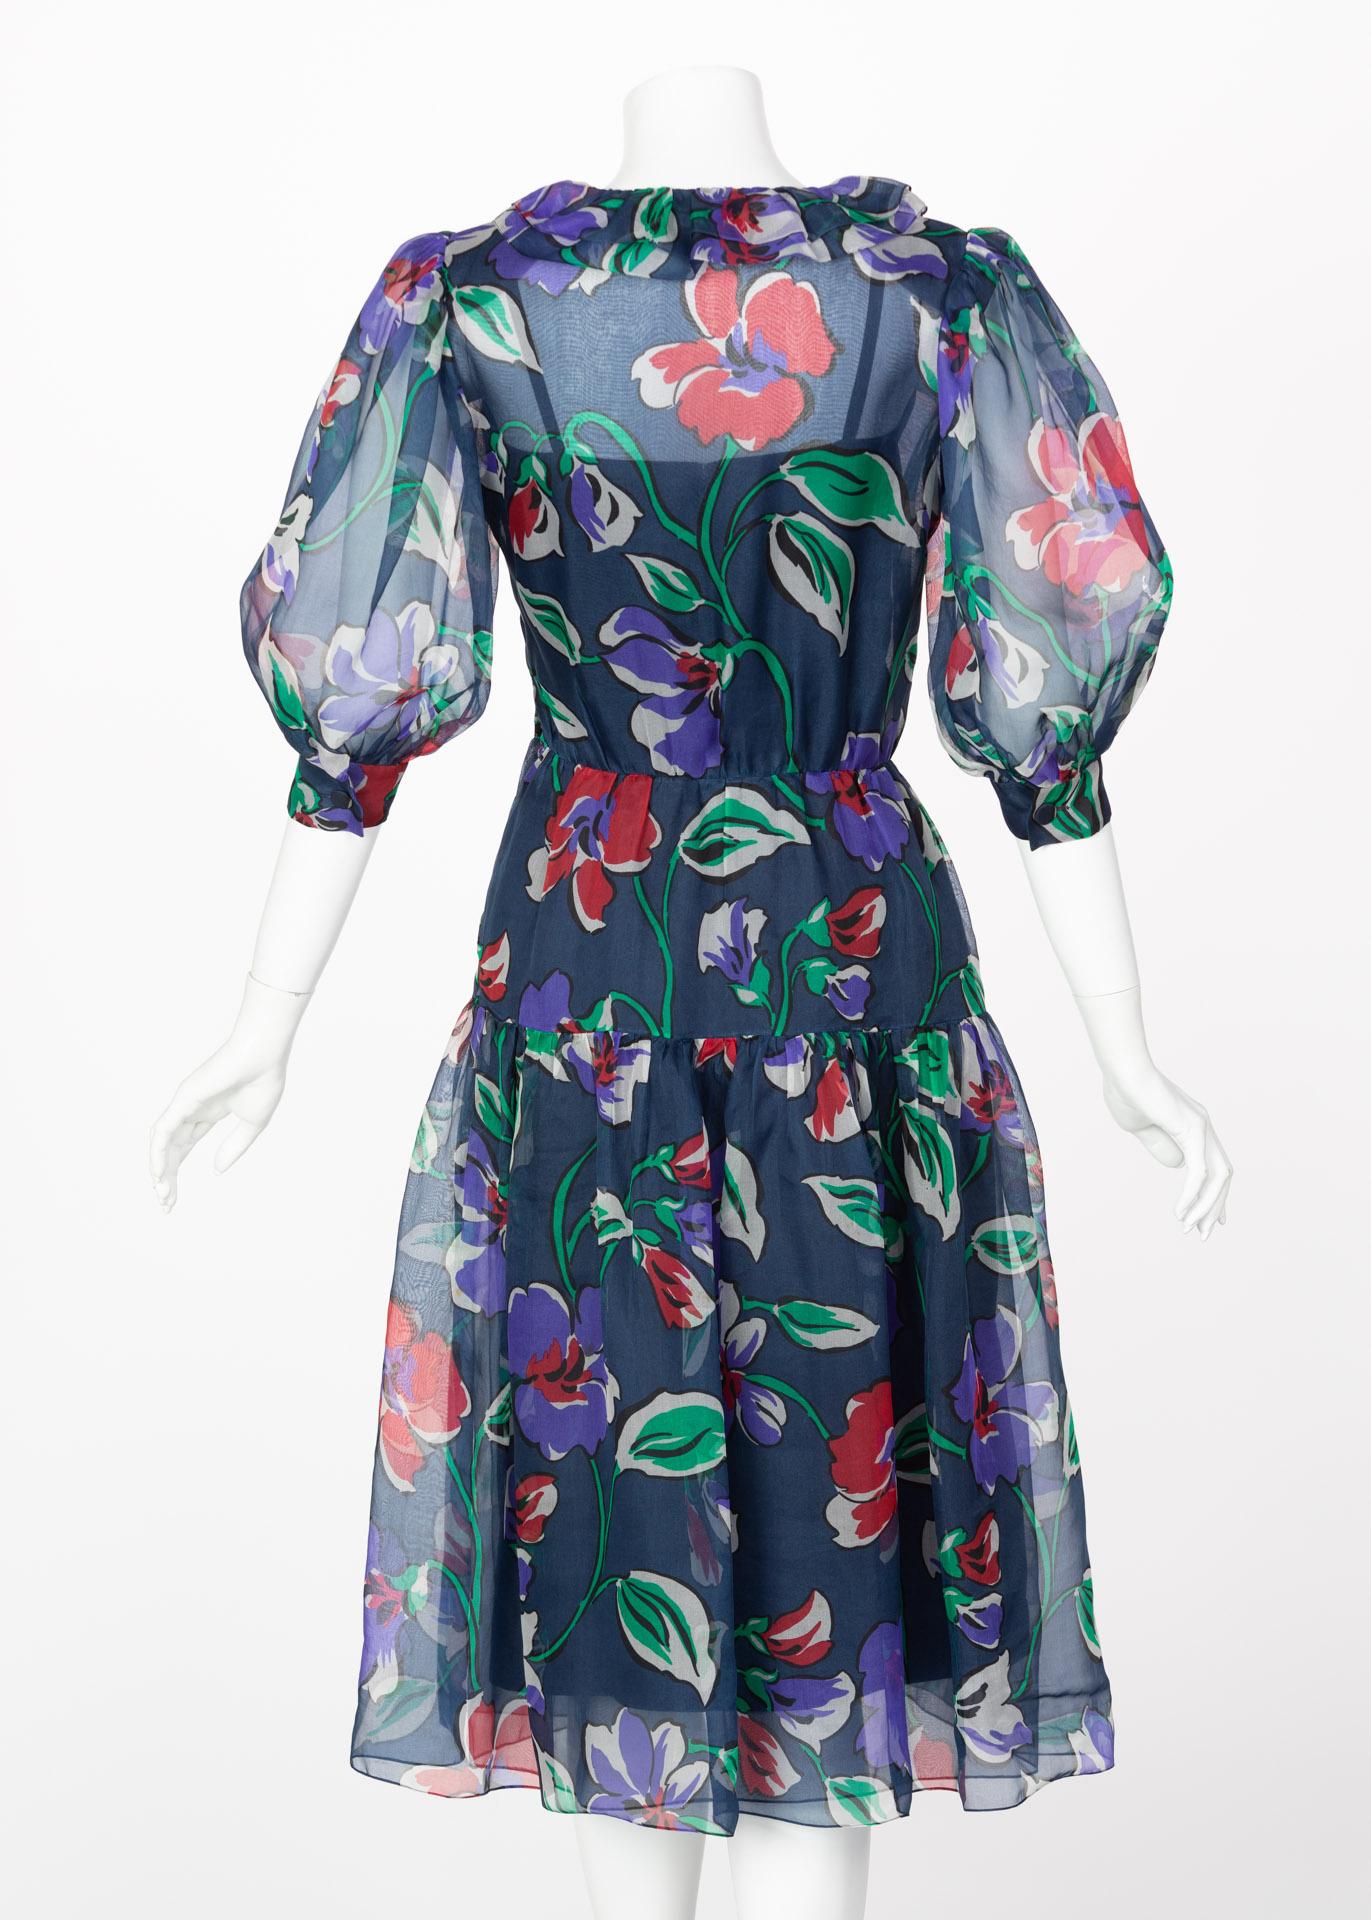 Givenchy Blue Silk Organza Floral Print Dress, 1970s 1